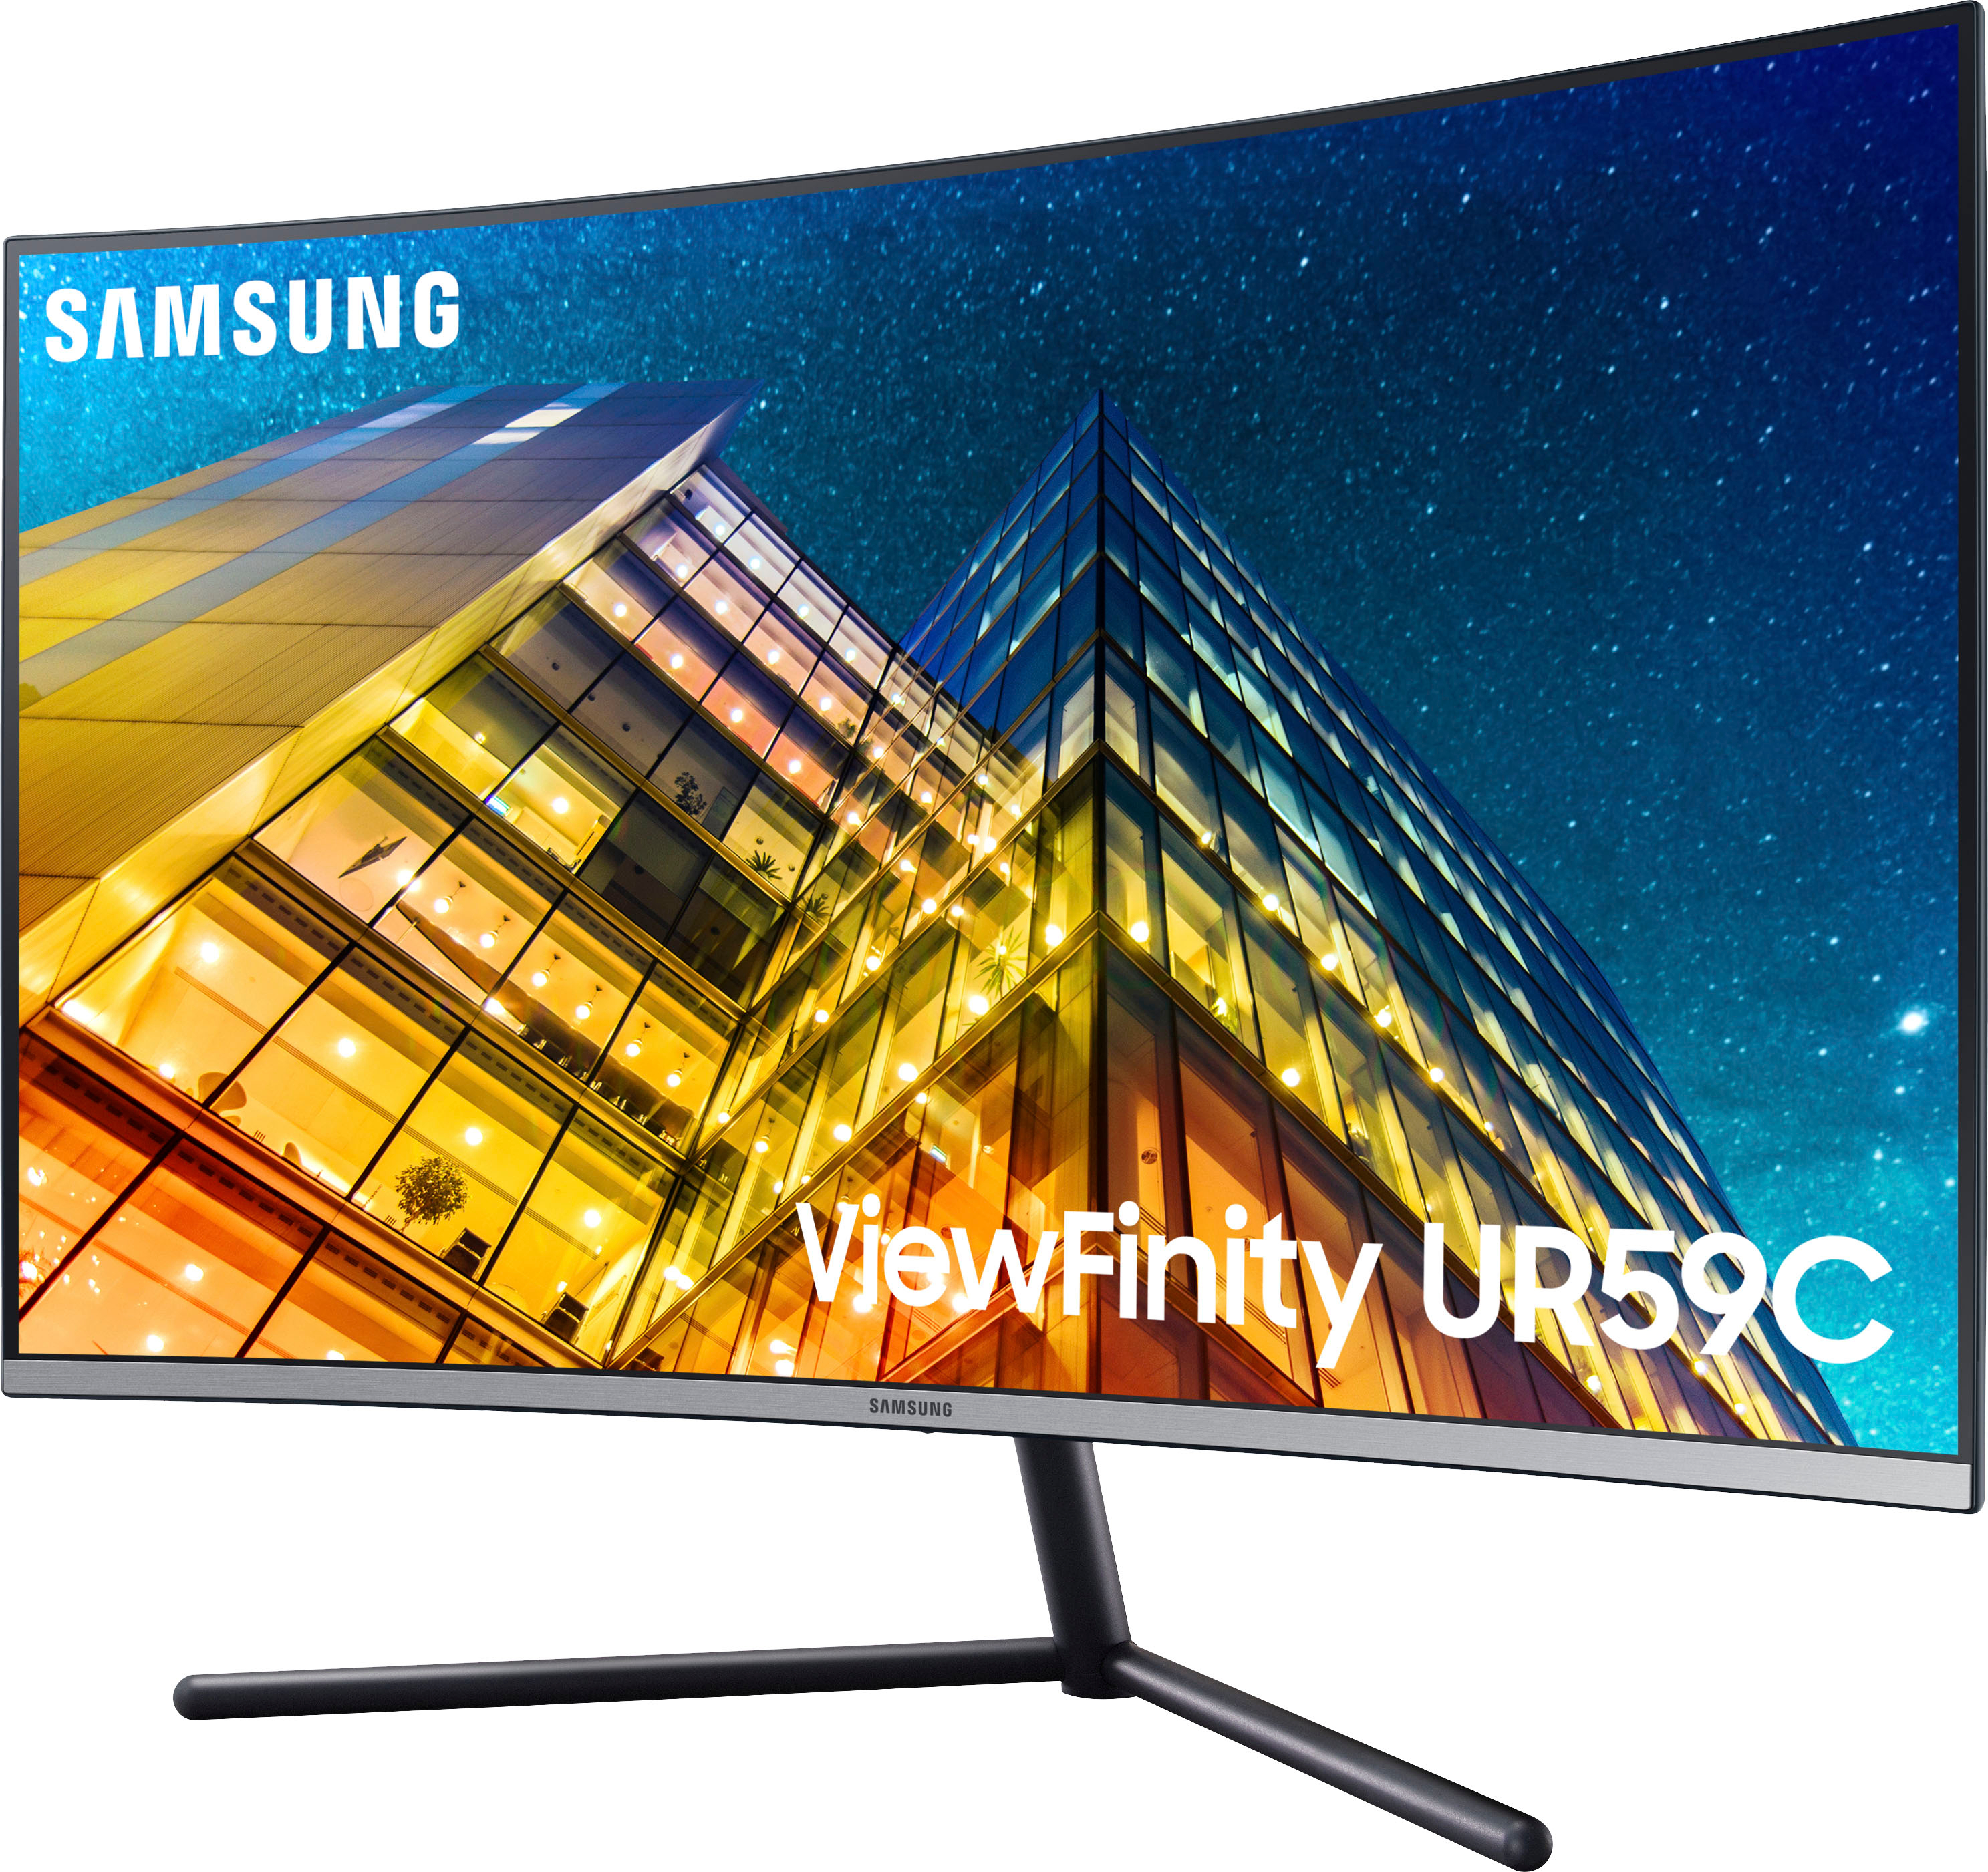 Angle View: Samsung - 31.5" LCD Curved 4K UHD Monitor (HDMI) - Dark Blue Gray